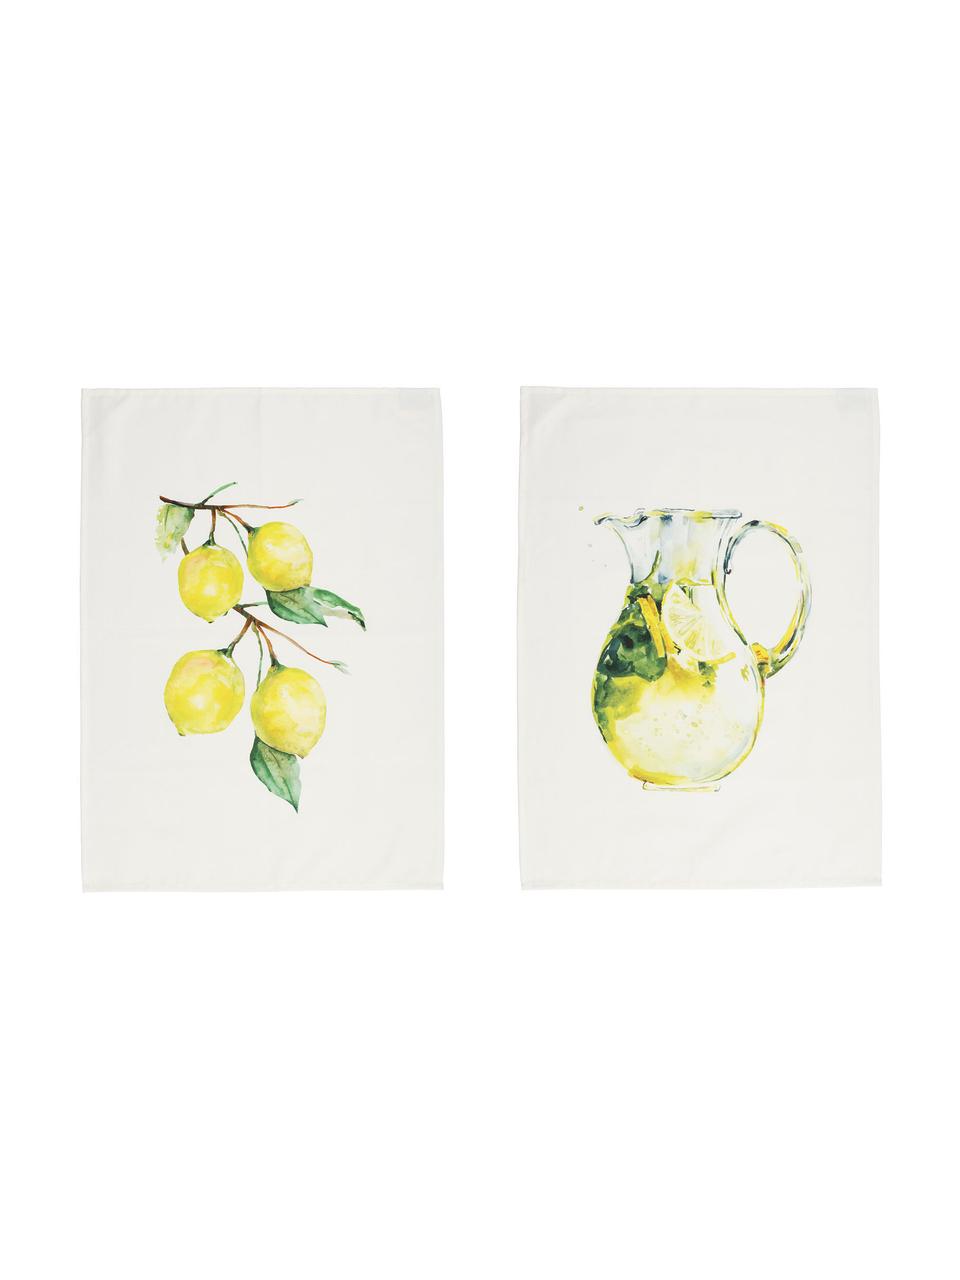 Geschirrtücher Citronade mit Zitronenmotiven, 2 Stück, 100% Baumwolle, Weiß, Gelb, Grün, 50 x 70 cm